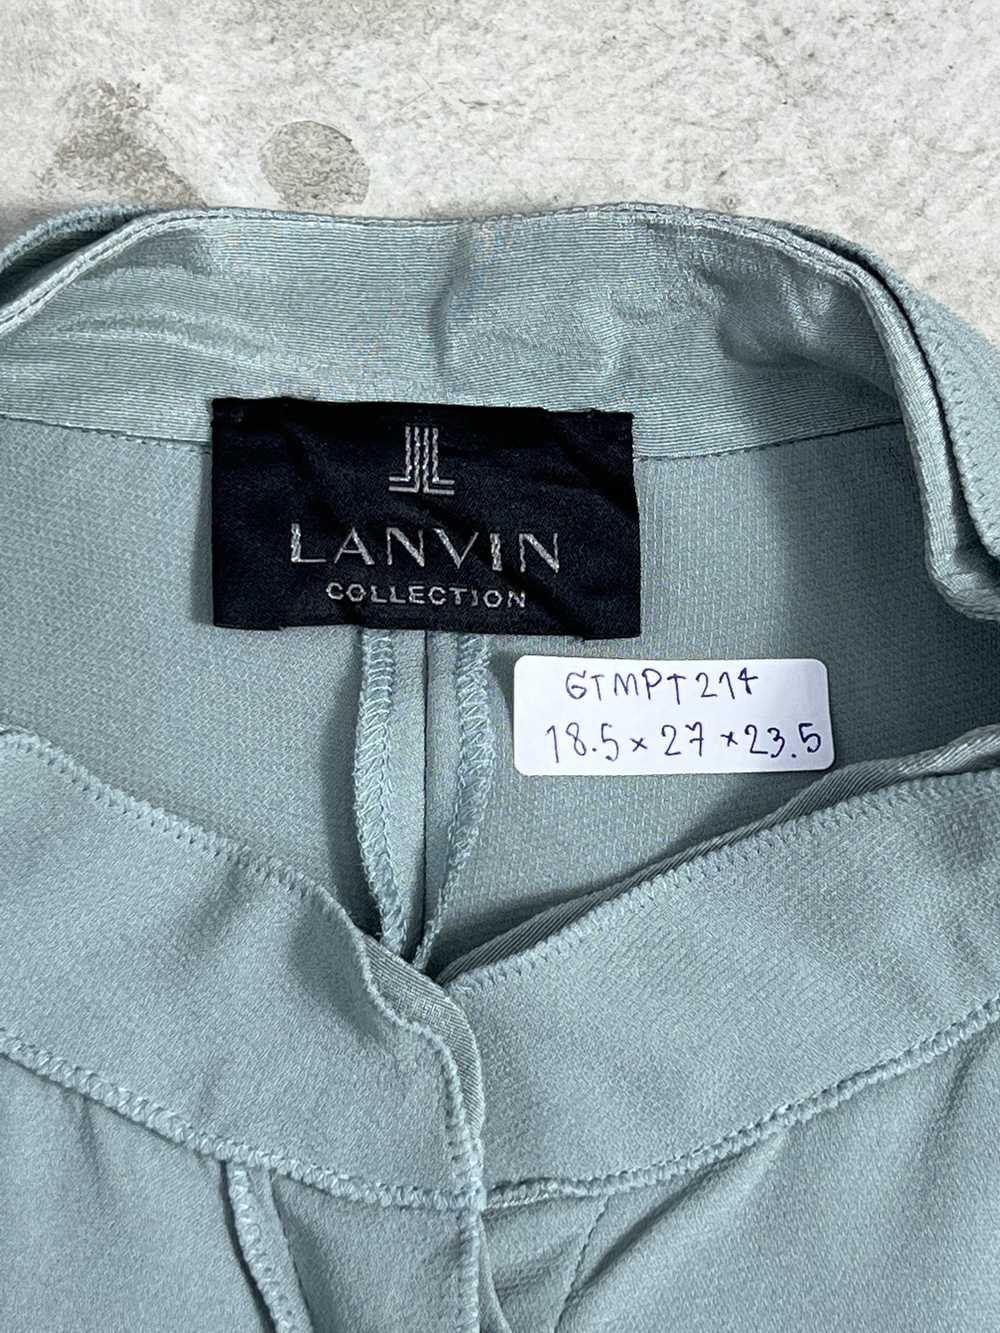 Designer × Lanvin Lanvin Collection Button Up Shi… - image 2